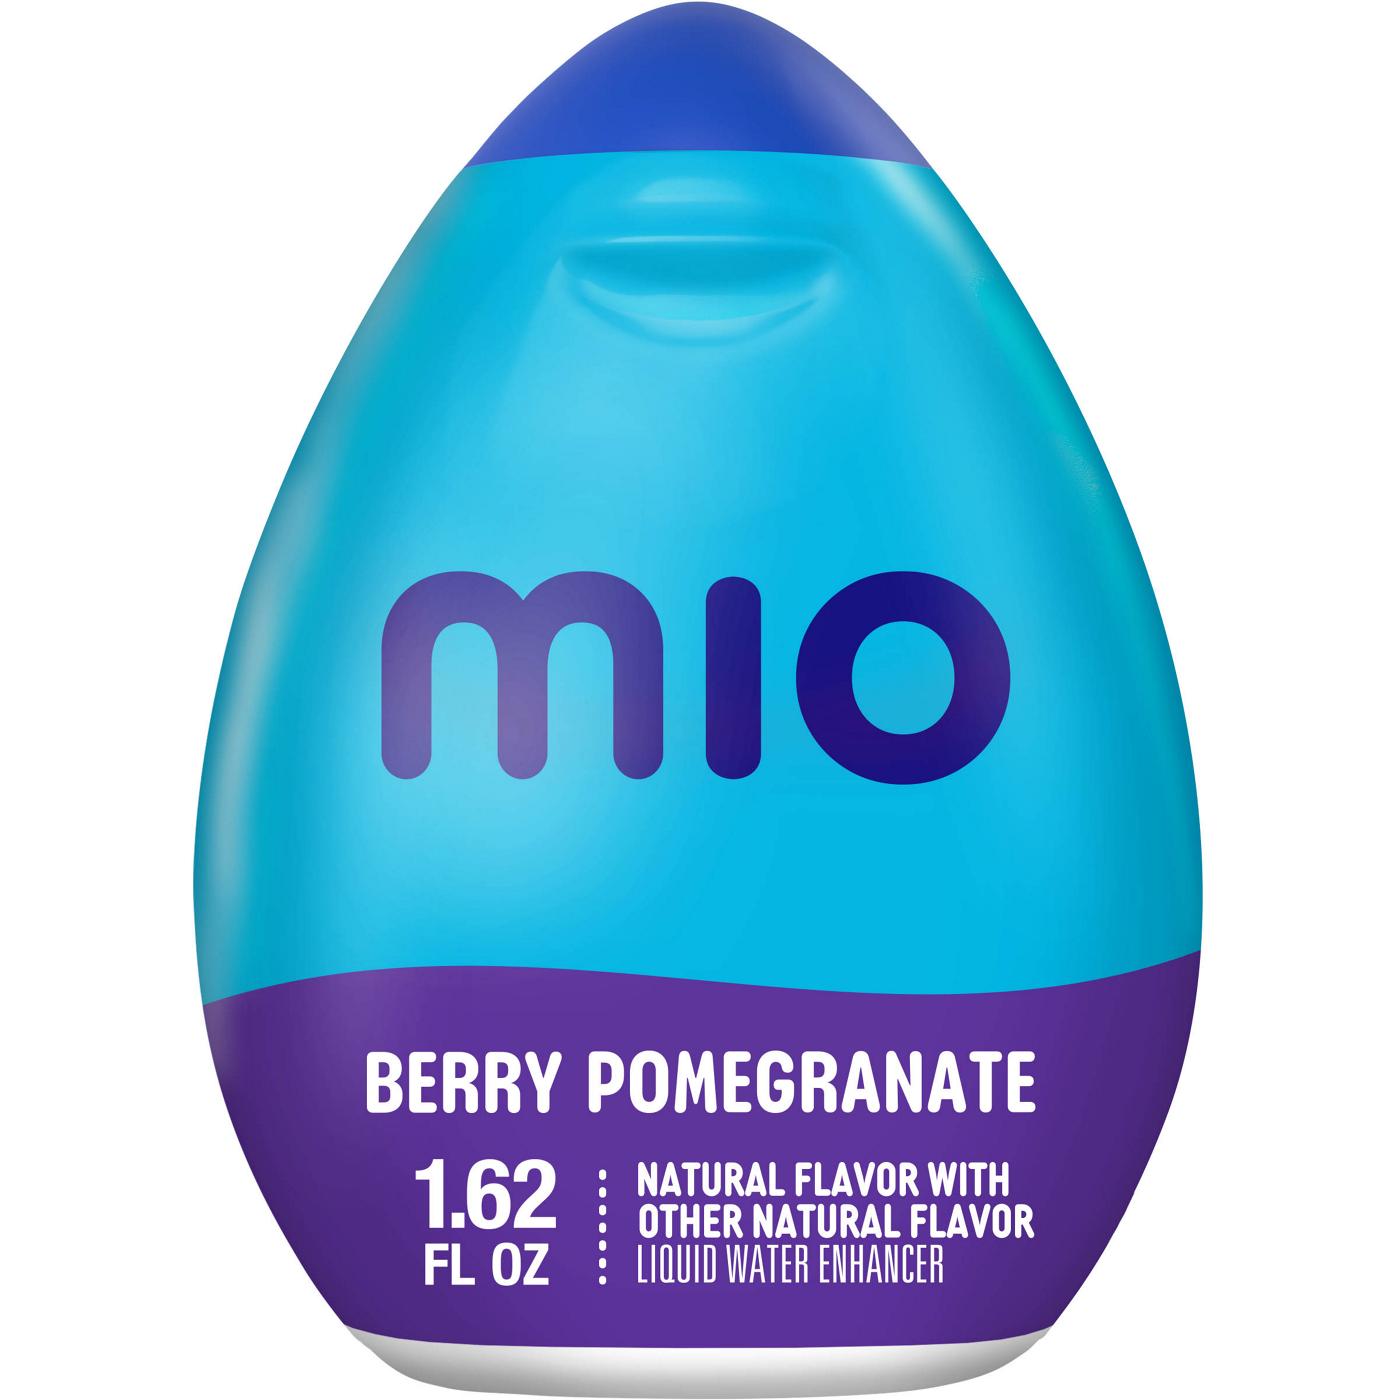 Mio Berry Pomegranate Liquid Water Enhancer; image 1 of 2